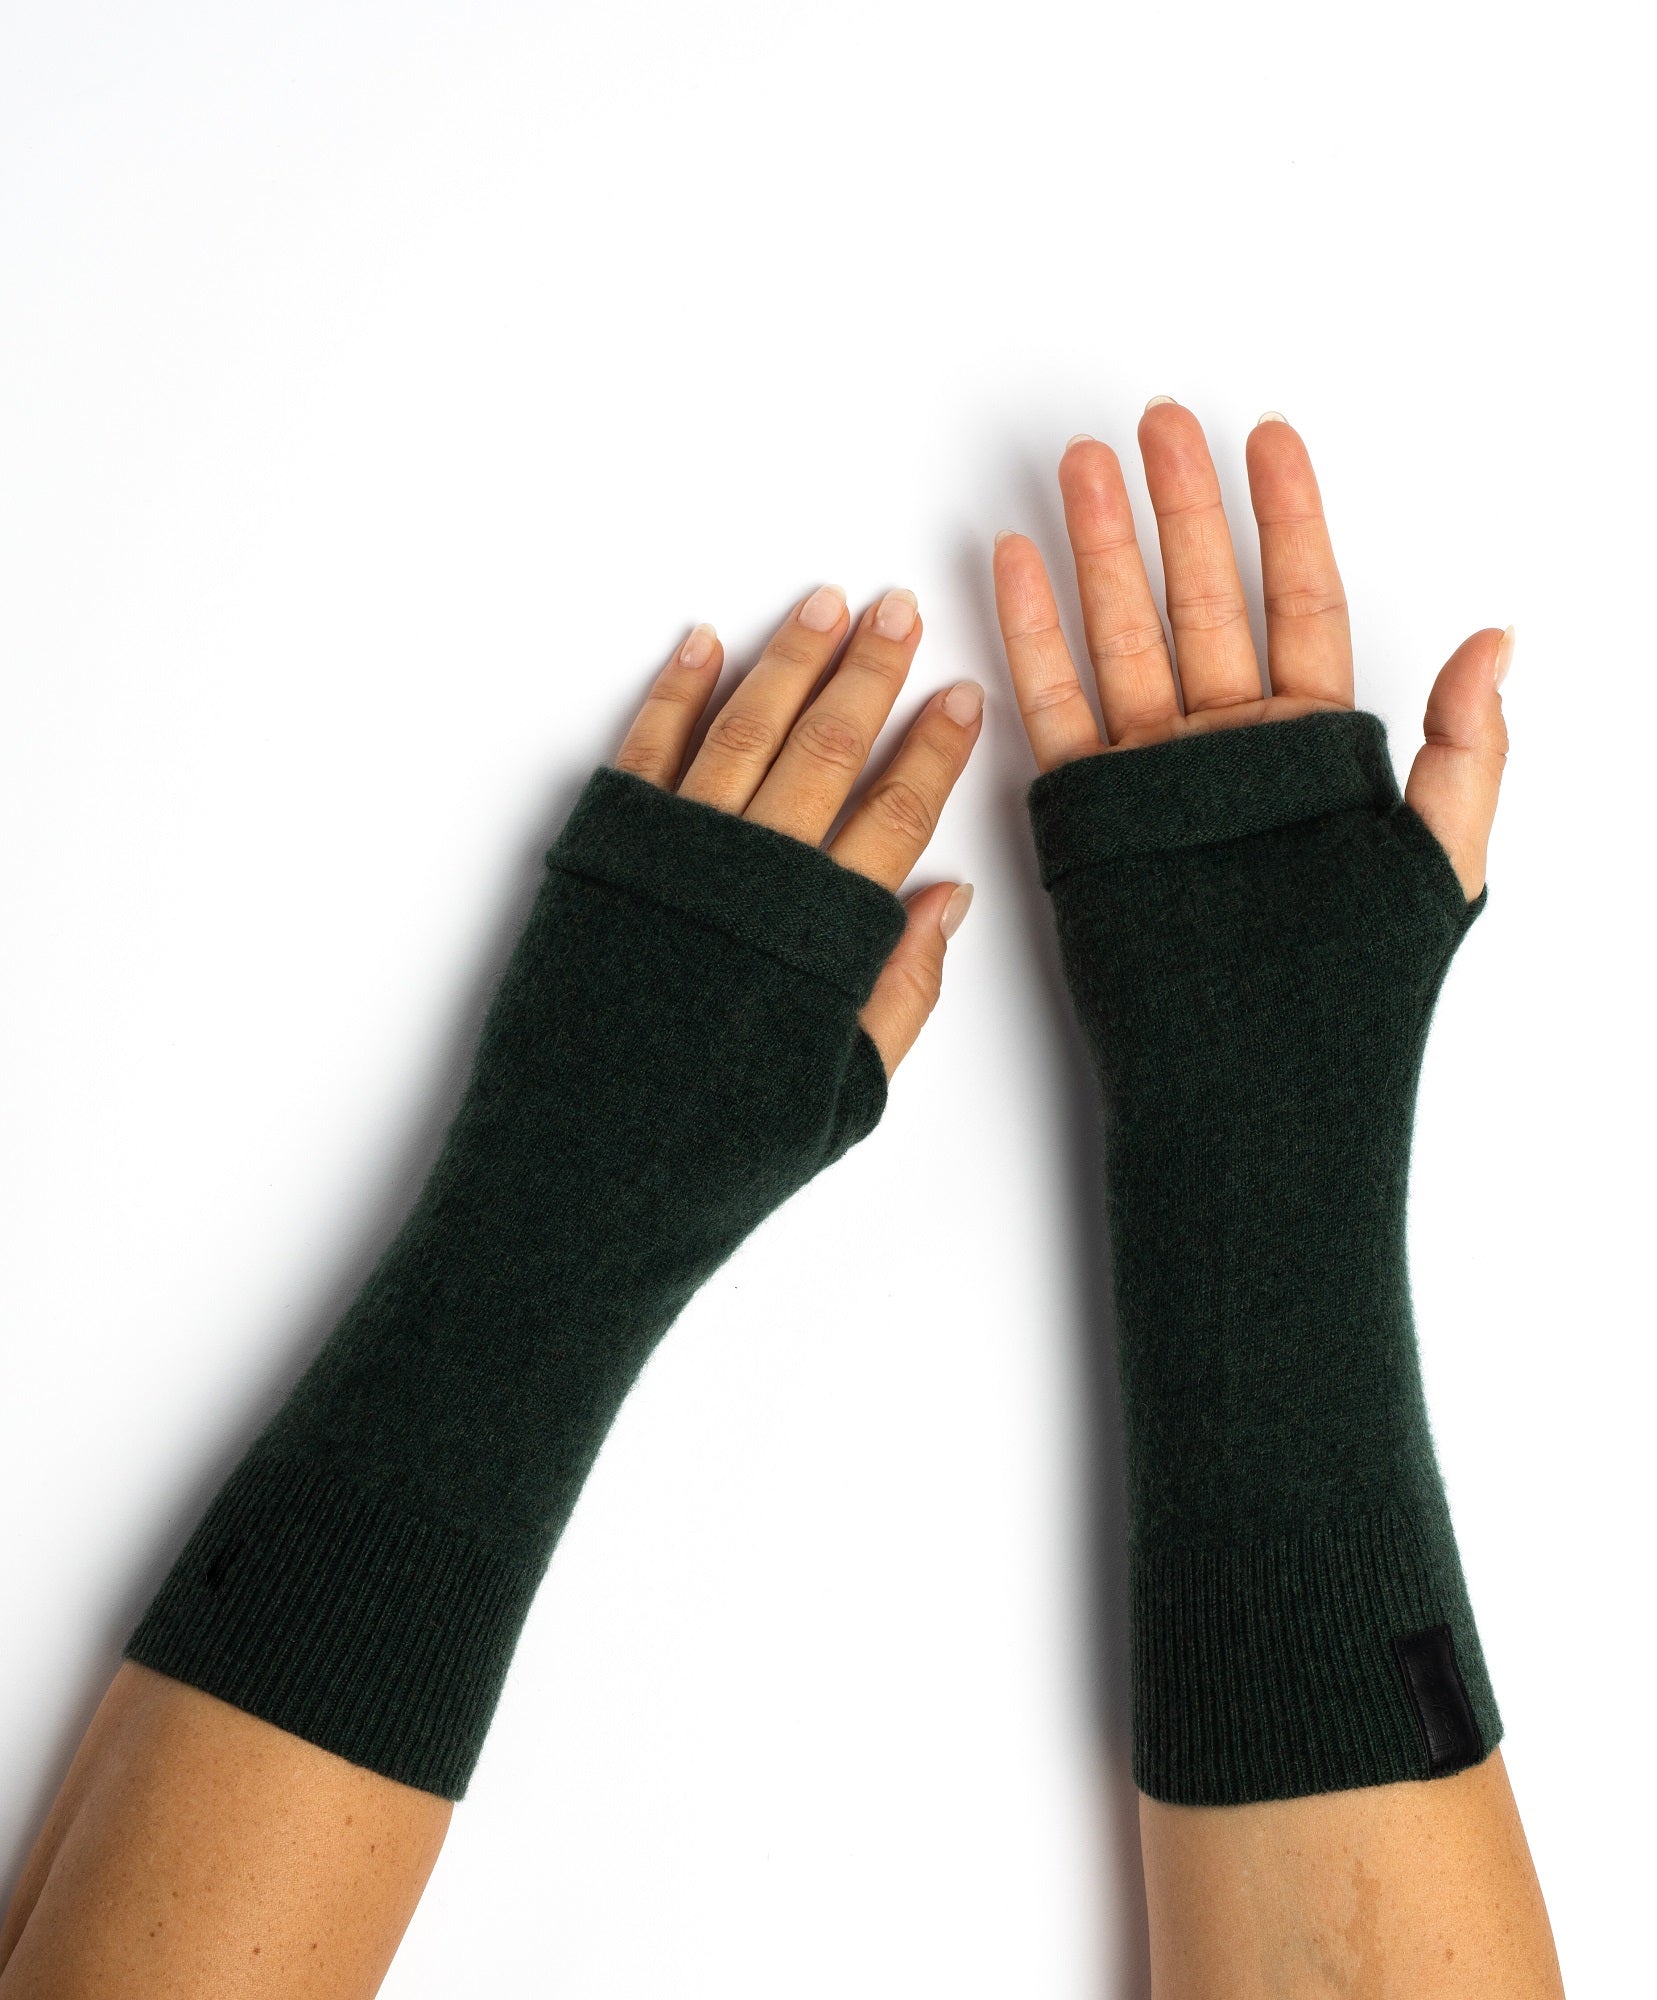 Green and Beige - Assorted Winter Ready Box - Fingerless gloves, Headband, Open scarf, beanie, Neck warmer